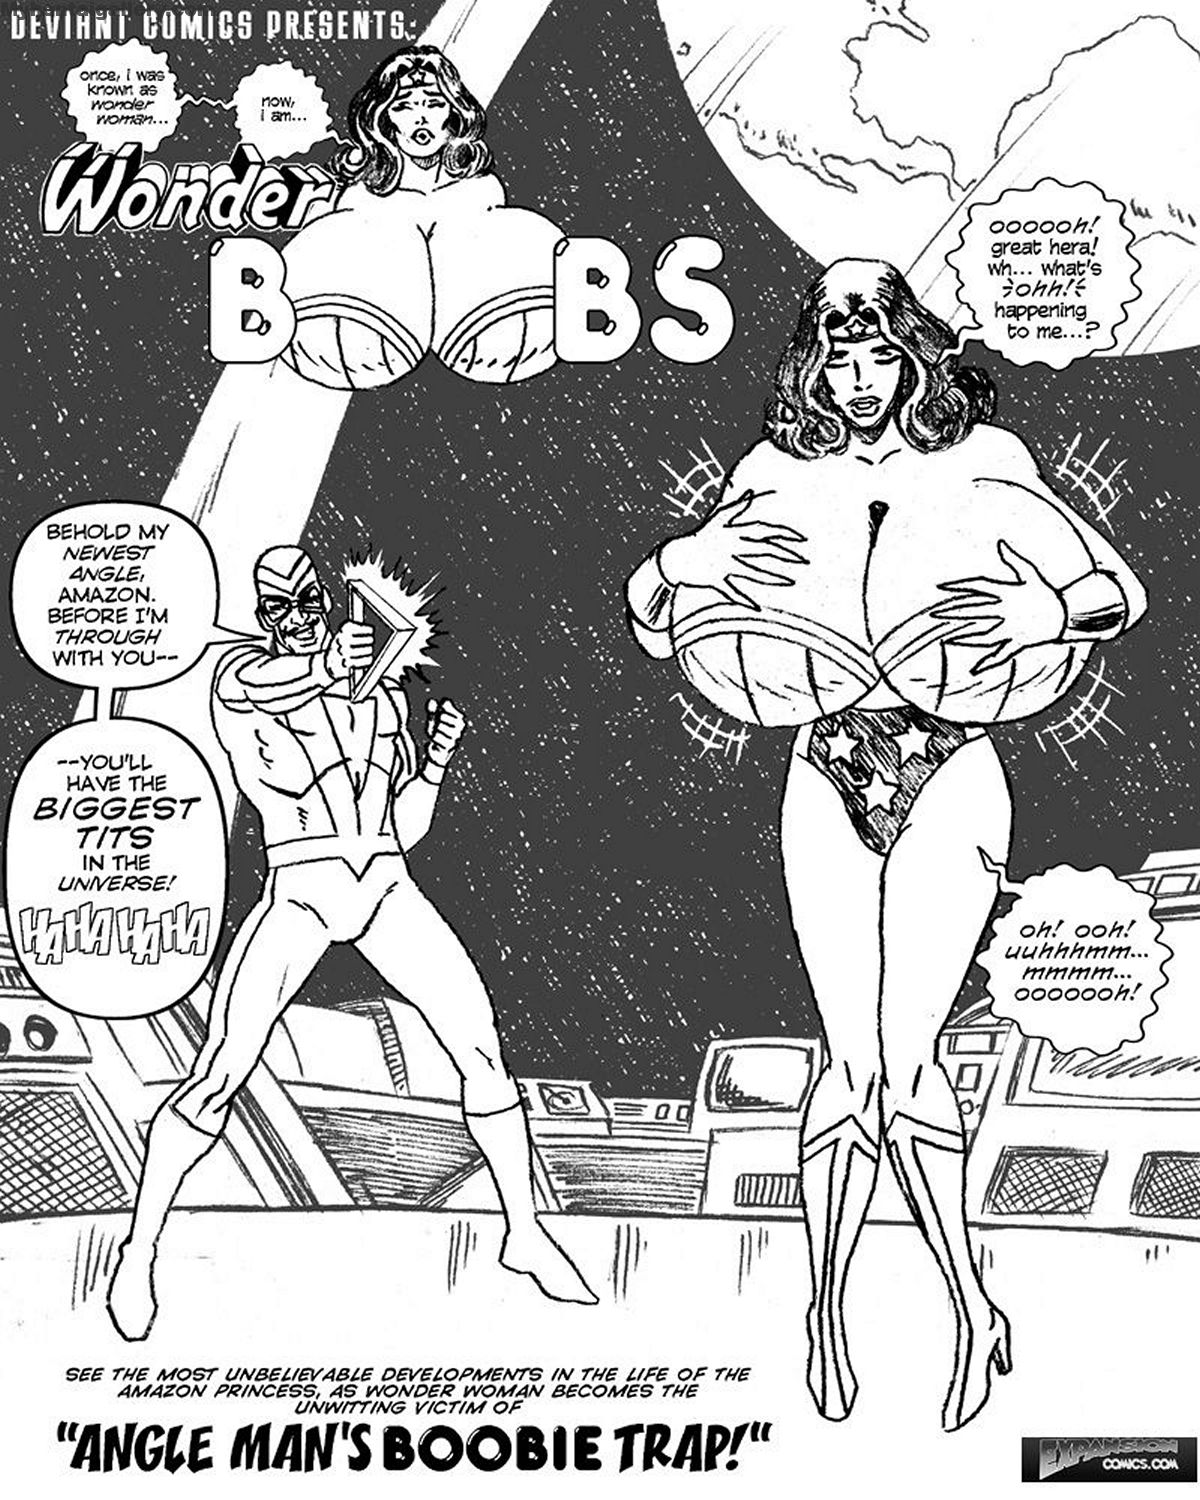 Cover Wonder Boobs